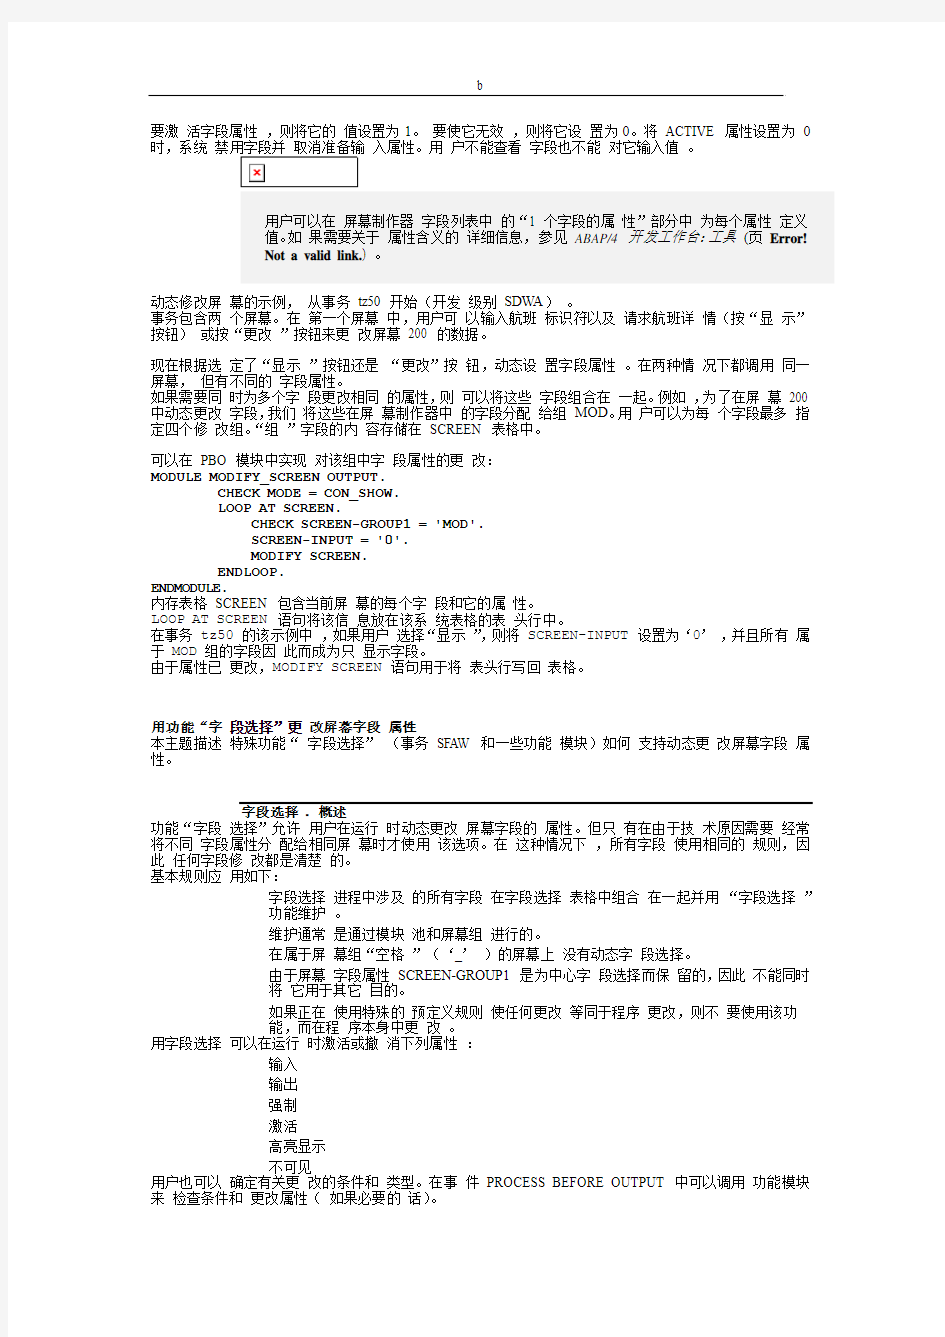 SAP的ABAP4语言中文培训教材第三部分第五章修改屏幕